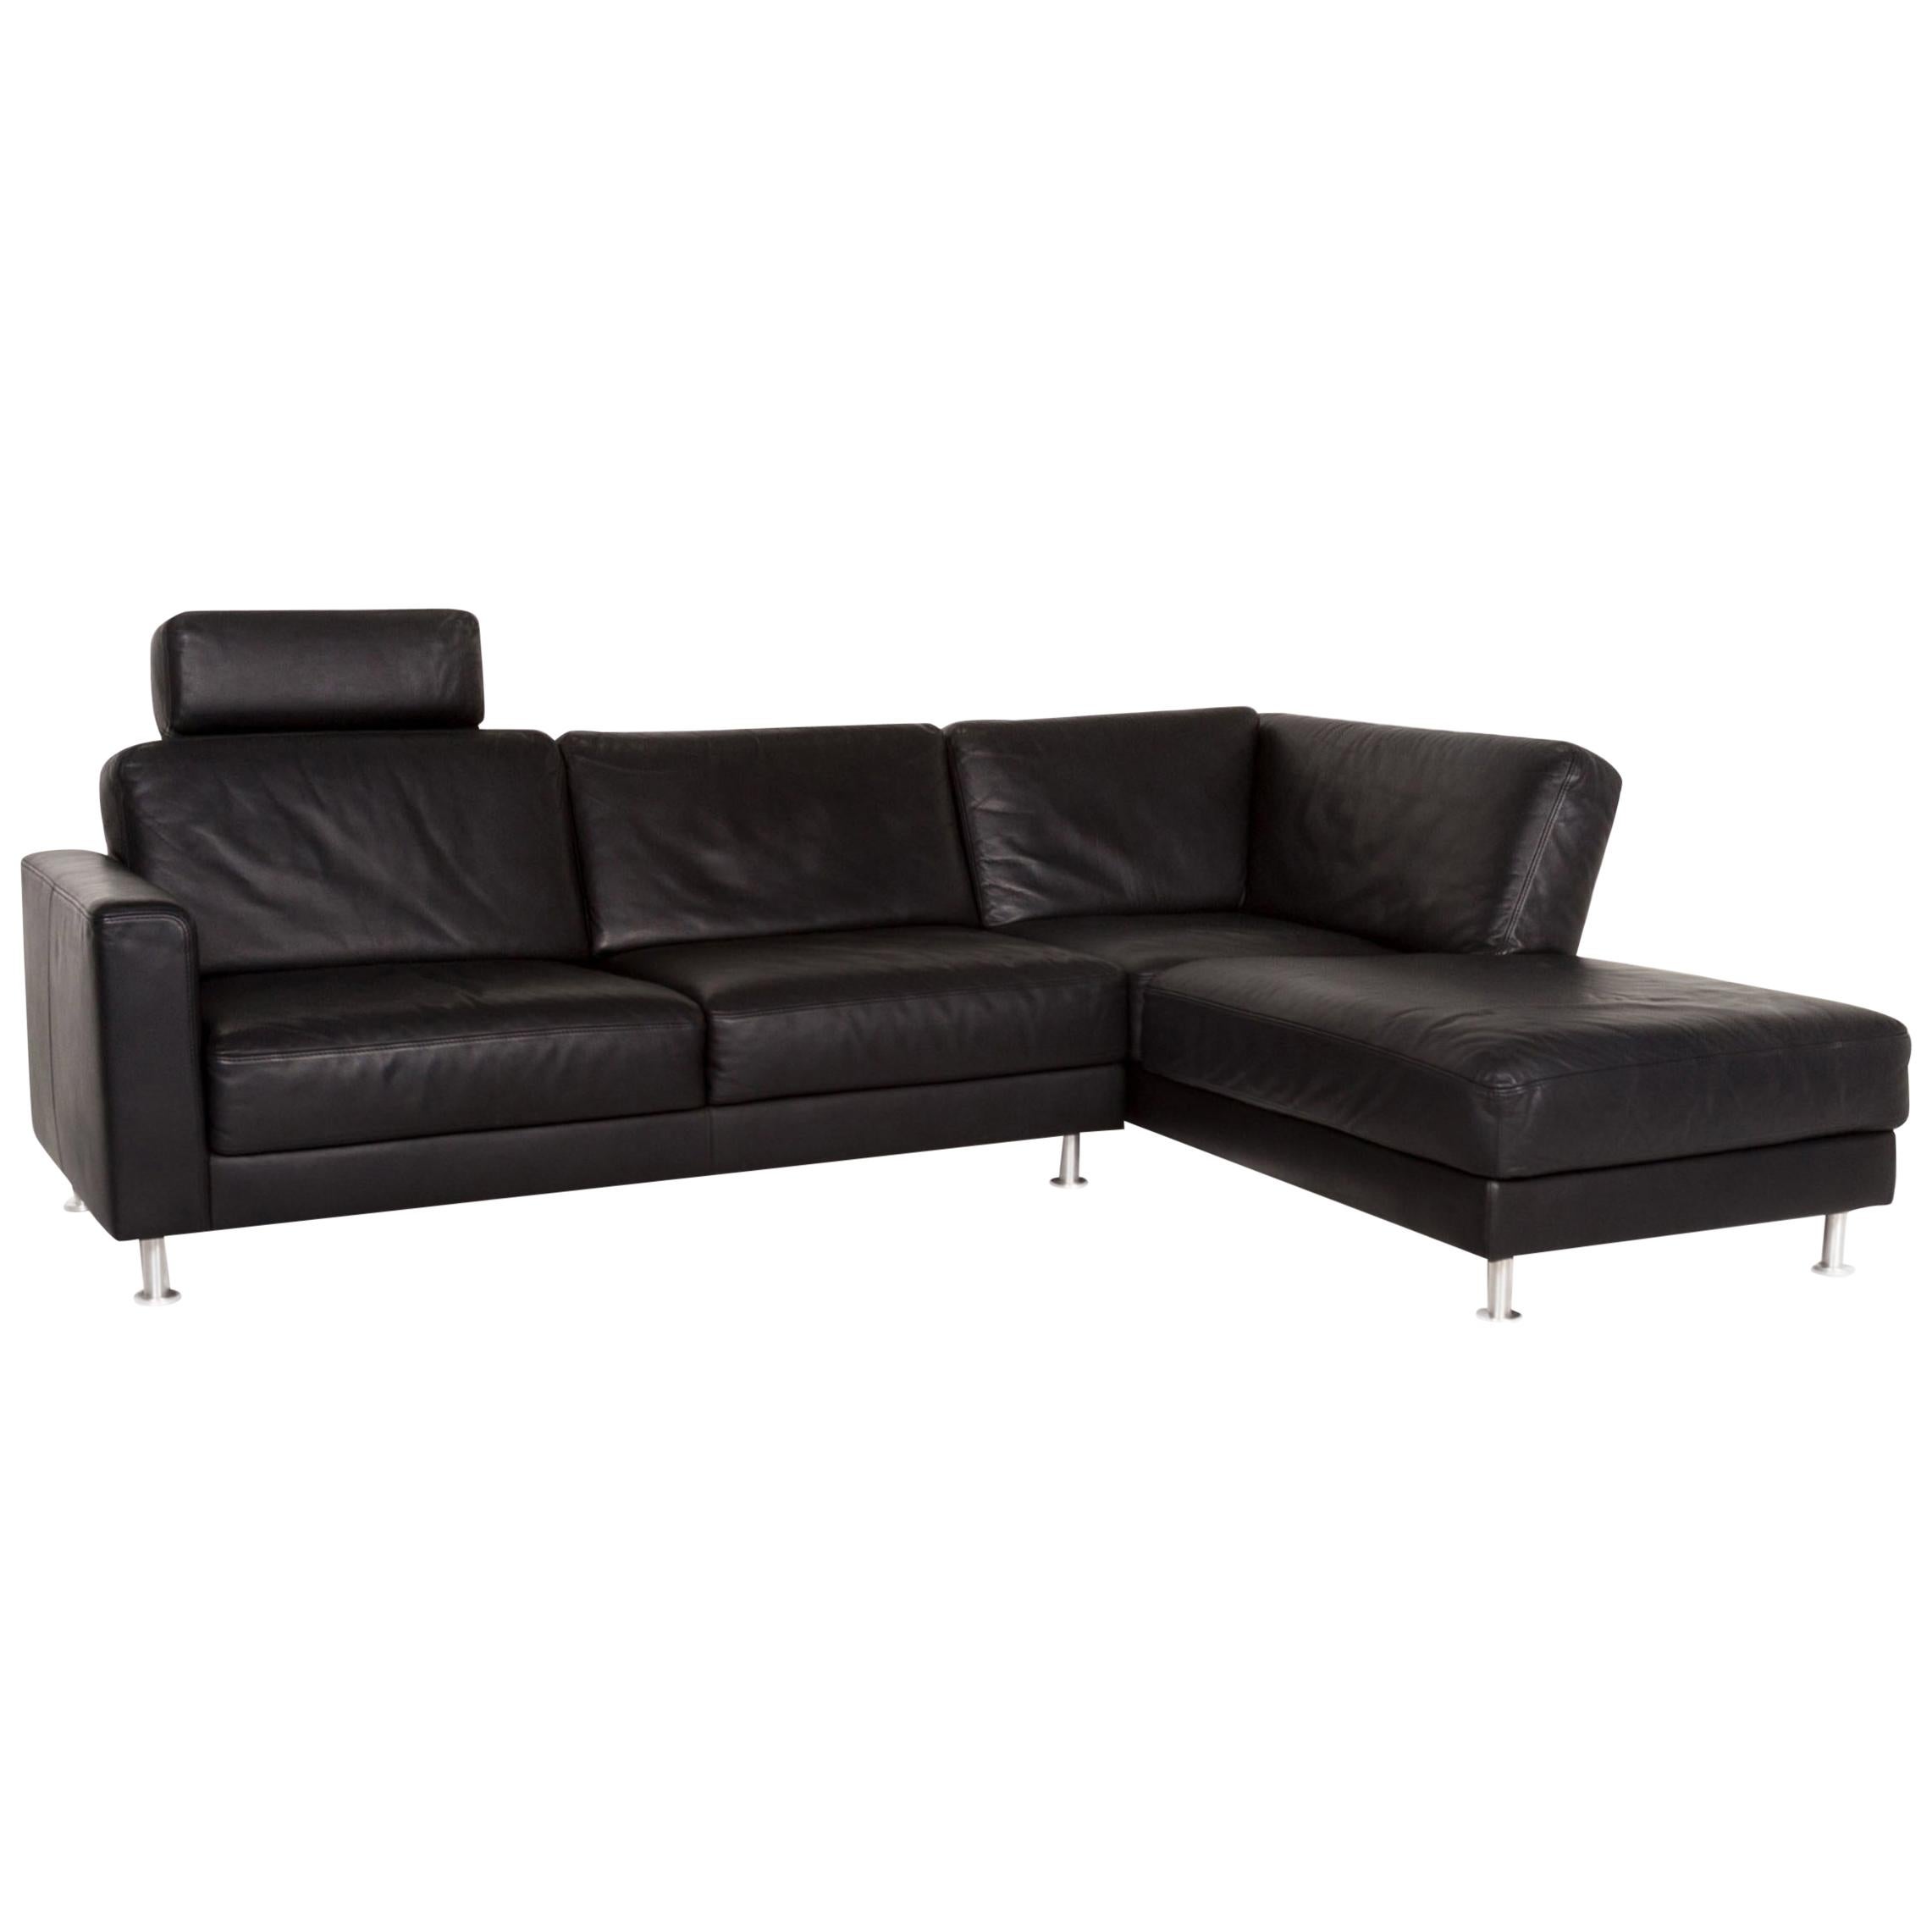 Brühl & Sippold Fiesta Leather Corner Sofa Black Sofa Couch